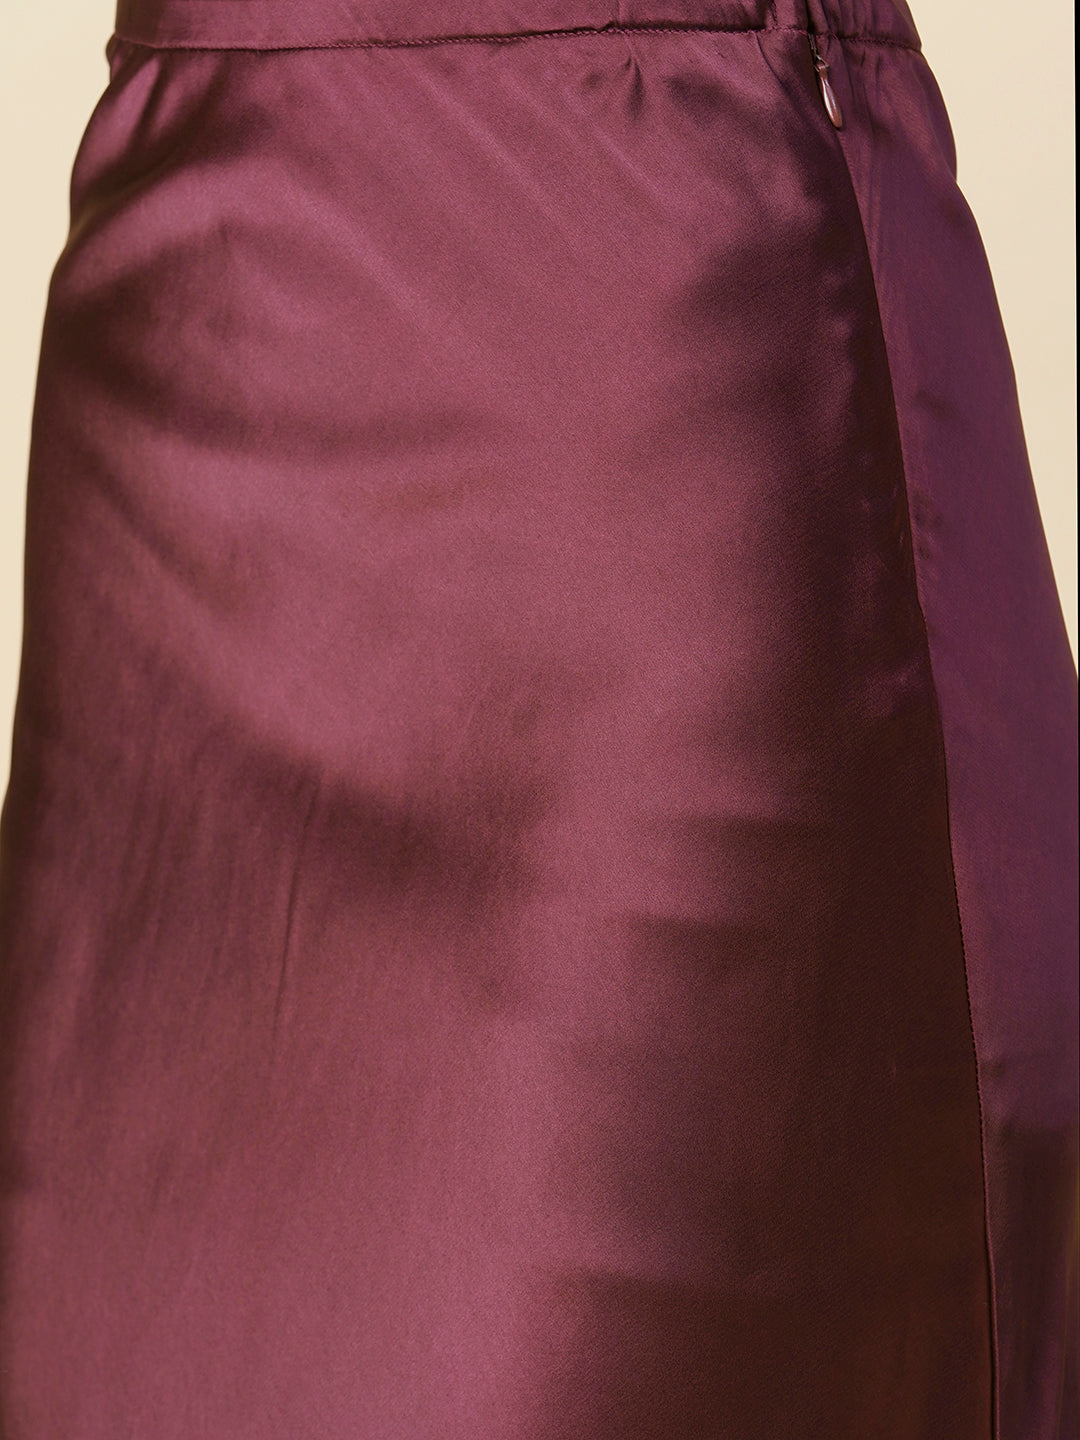 Satin Lycra Cowl Neck Strappy Top & Bias Skirt Co-Ord Set